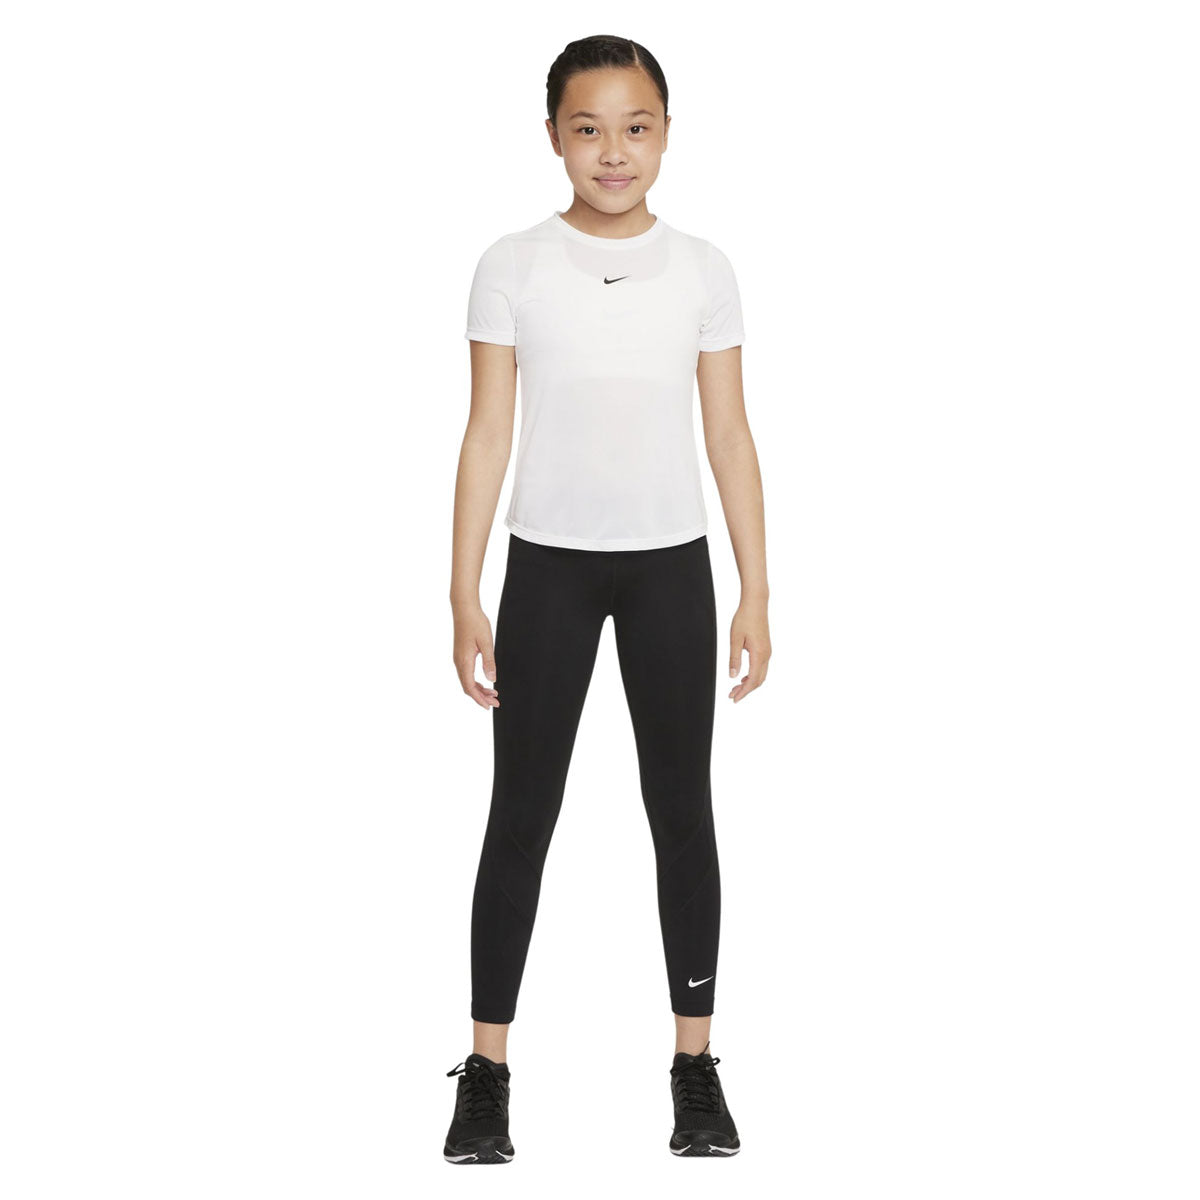 Nike Kids Dri-FIT One Short-Sleeve Top - KickzStore